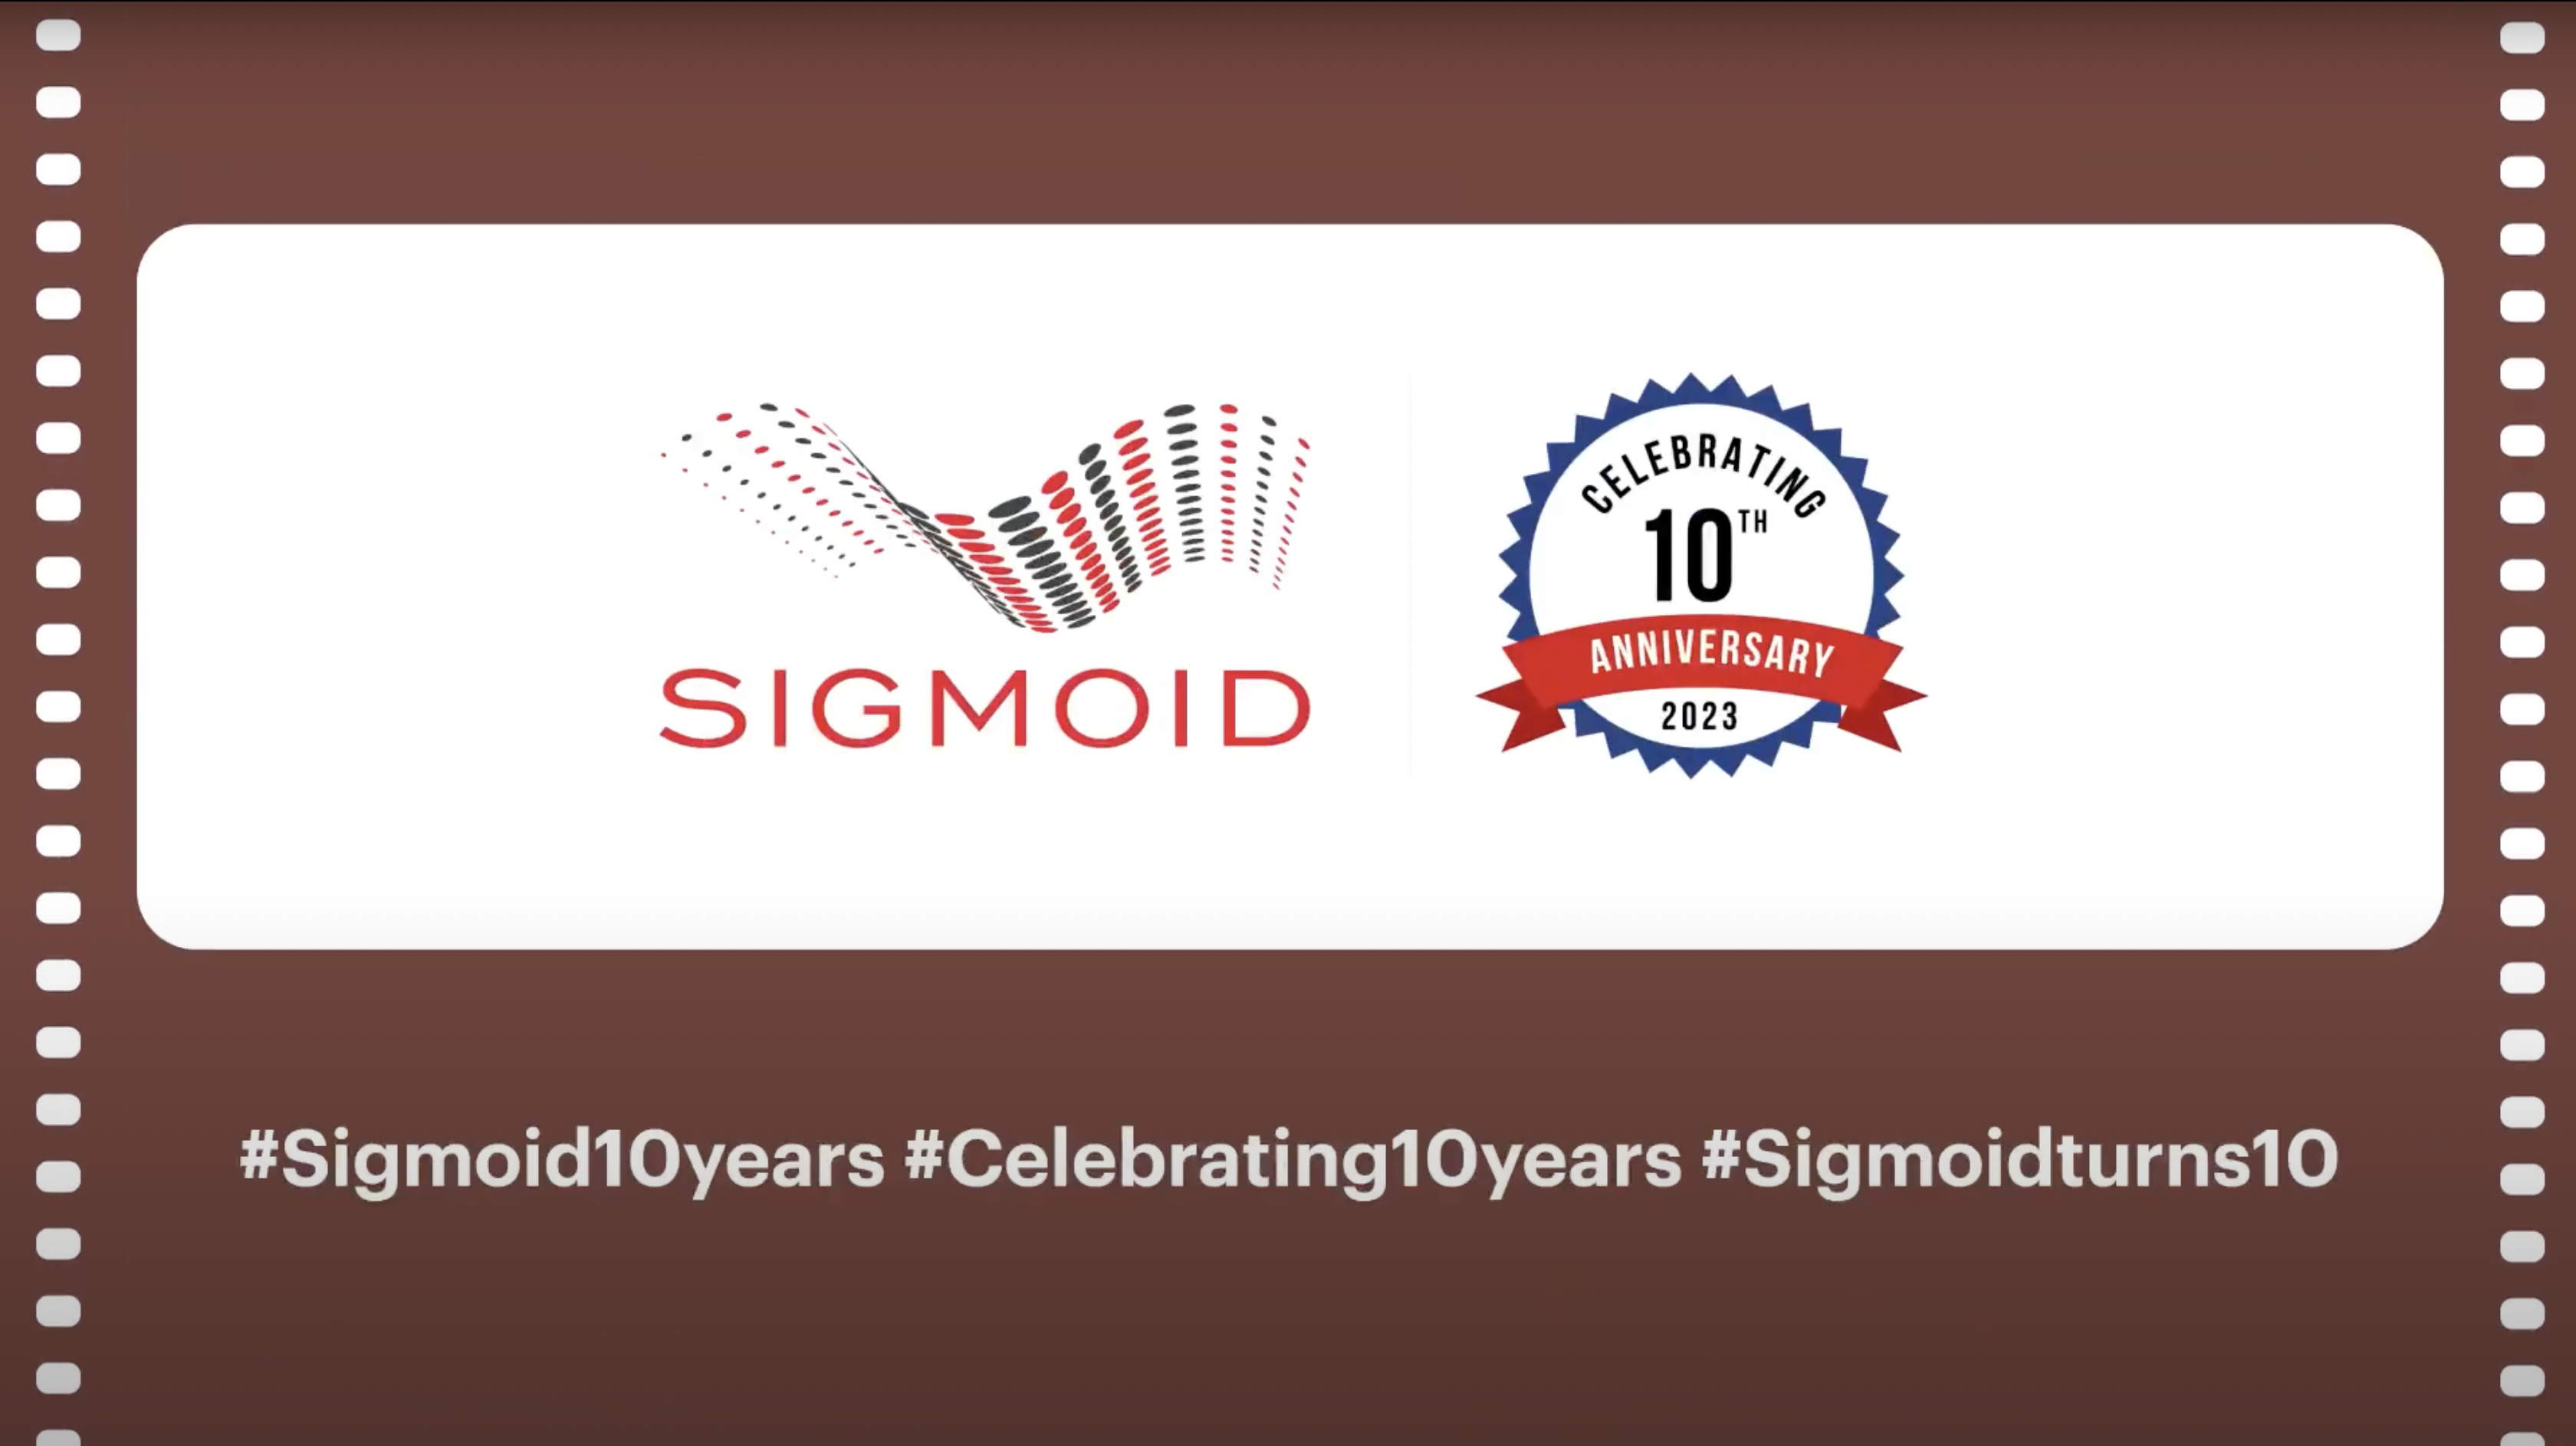 Celebrating 10 years of Sigmoid